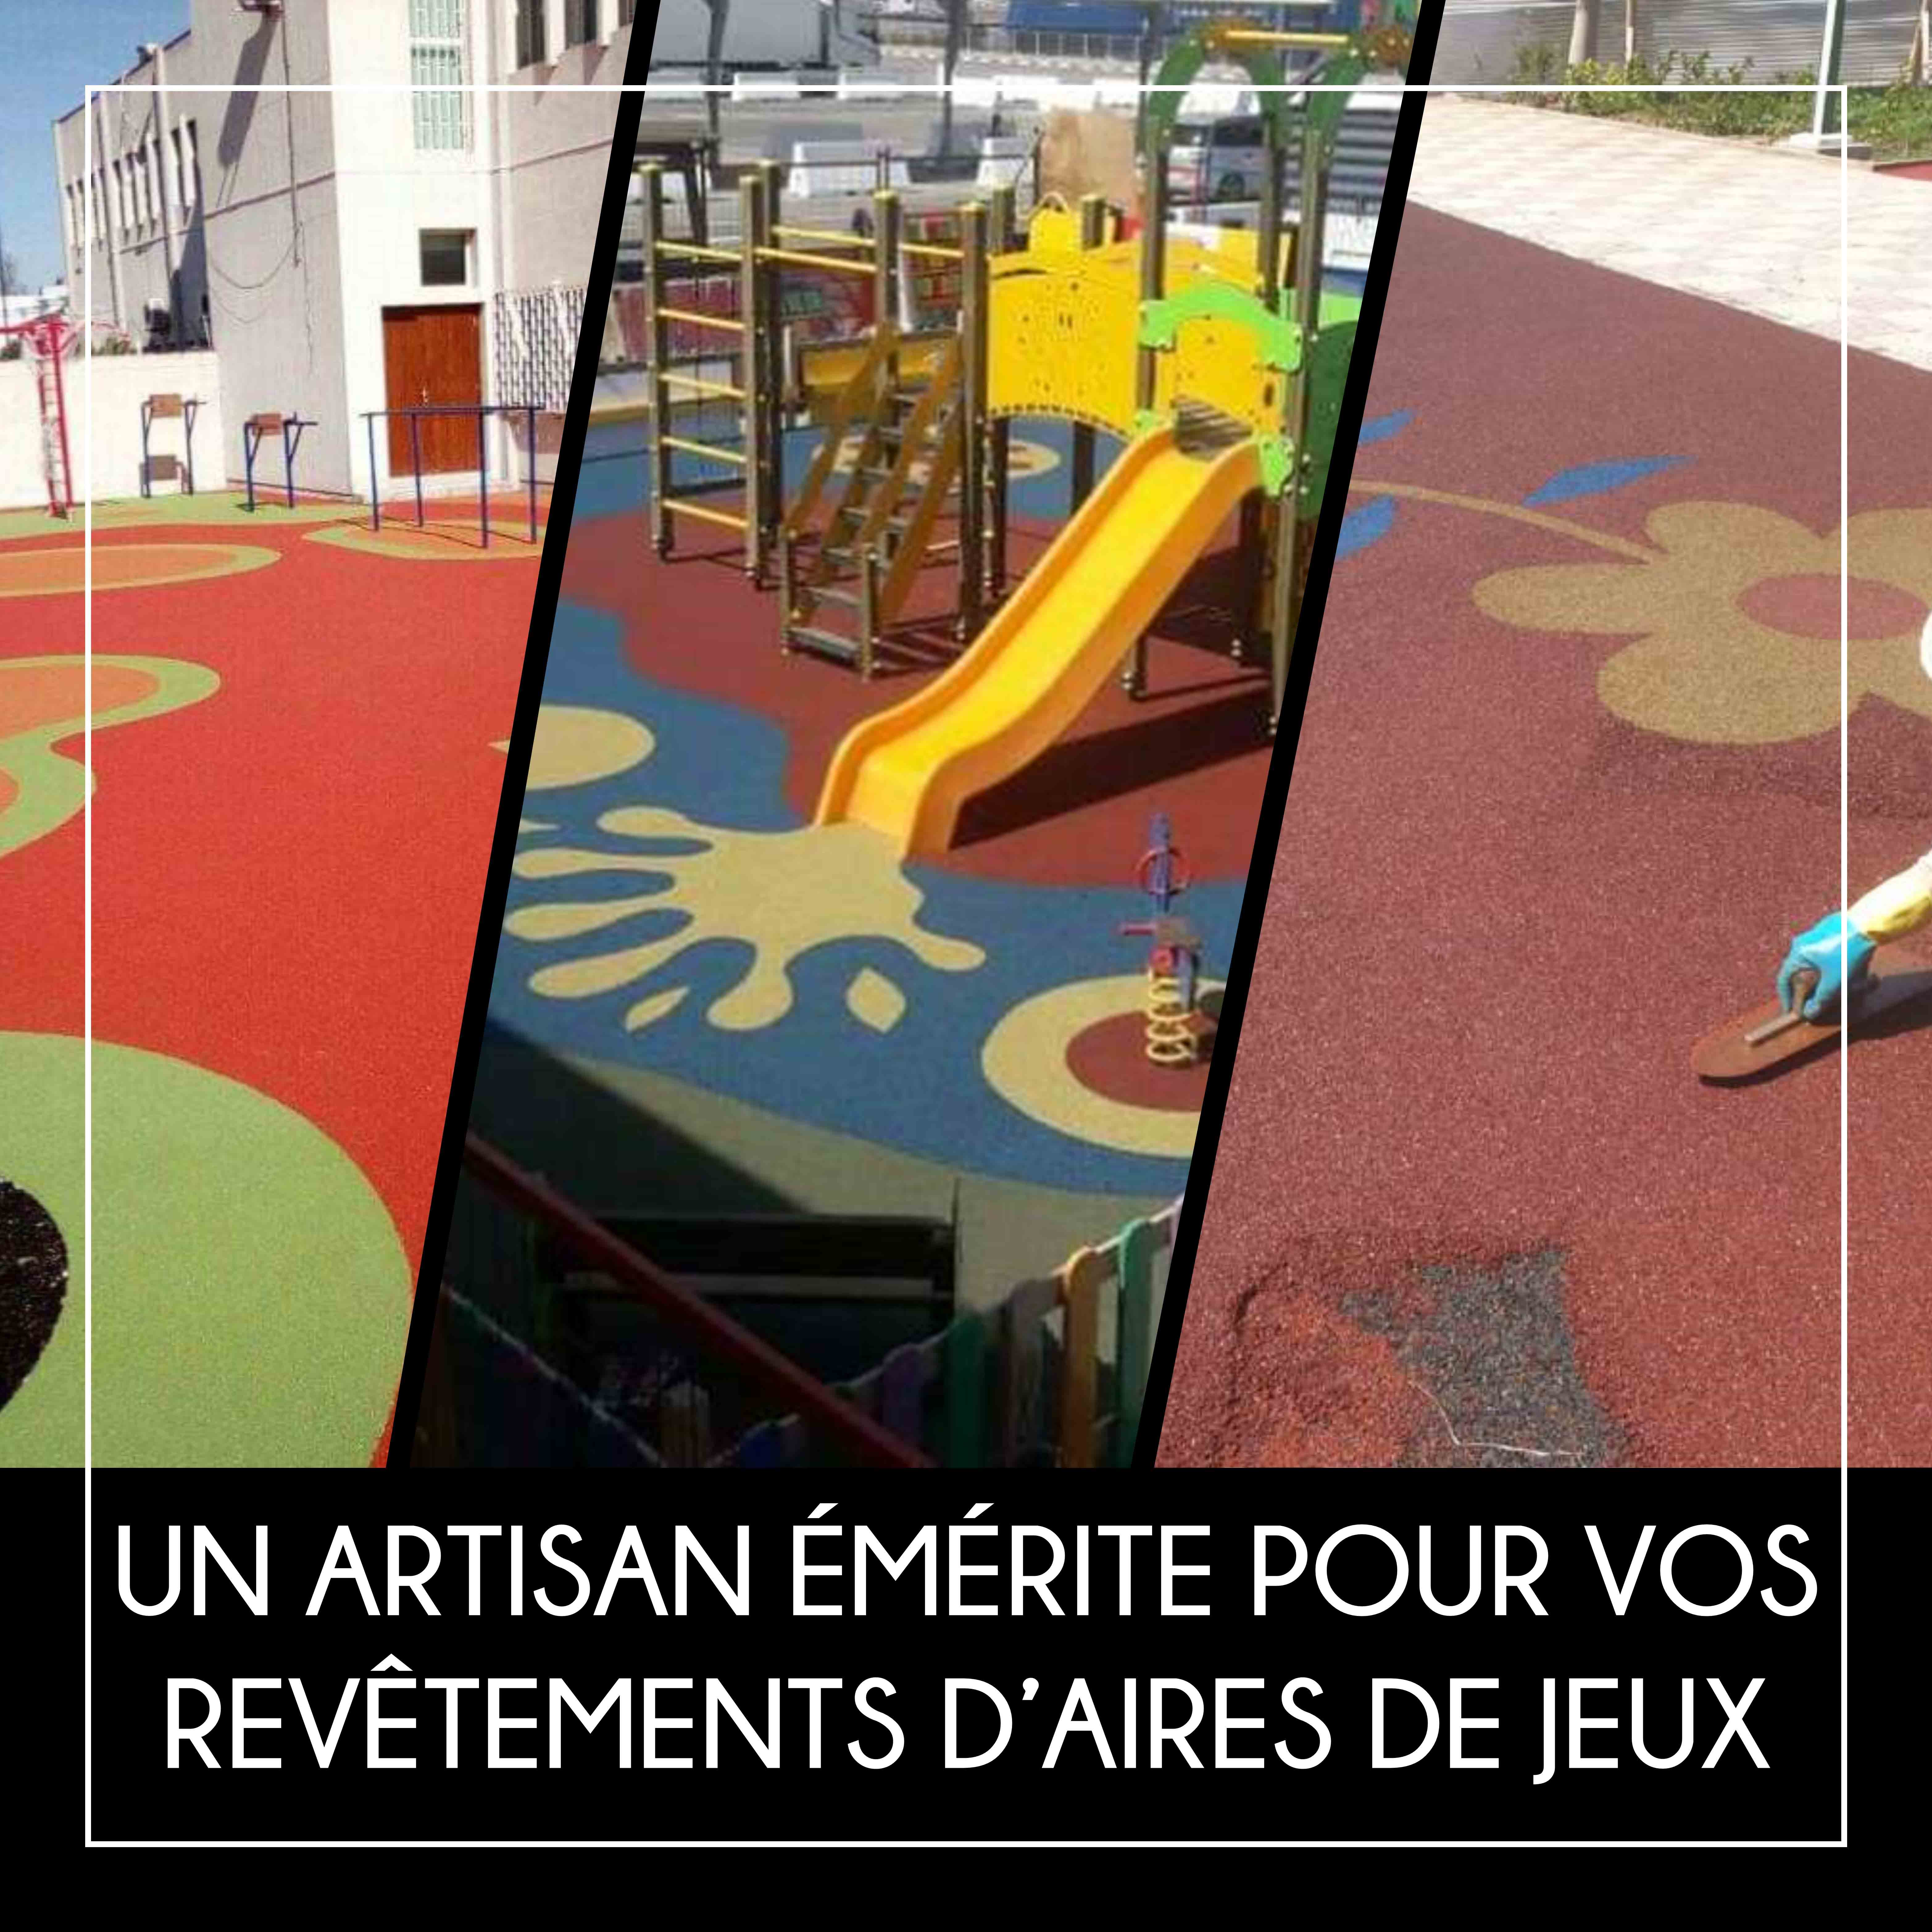 featured image revetement installation aire de jeux mabani.info mabani.ma